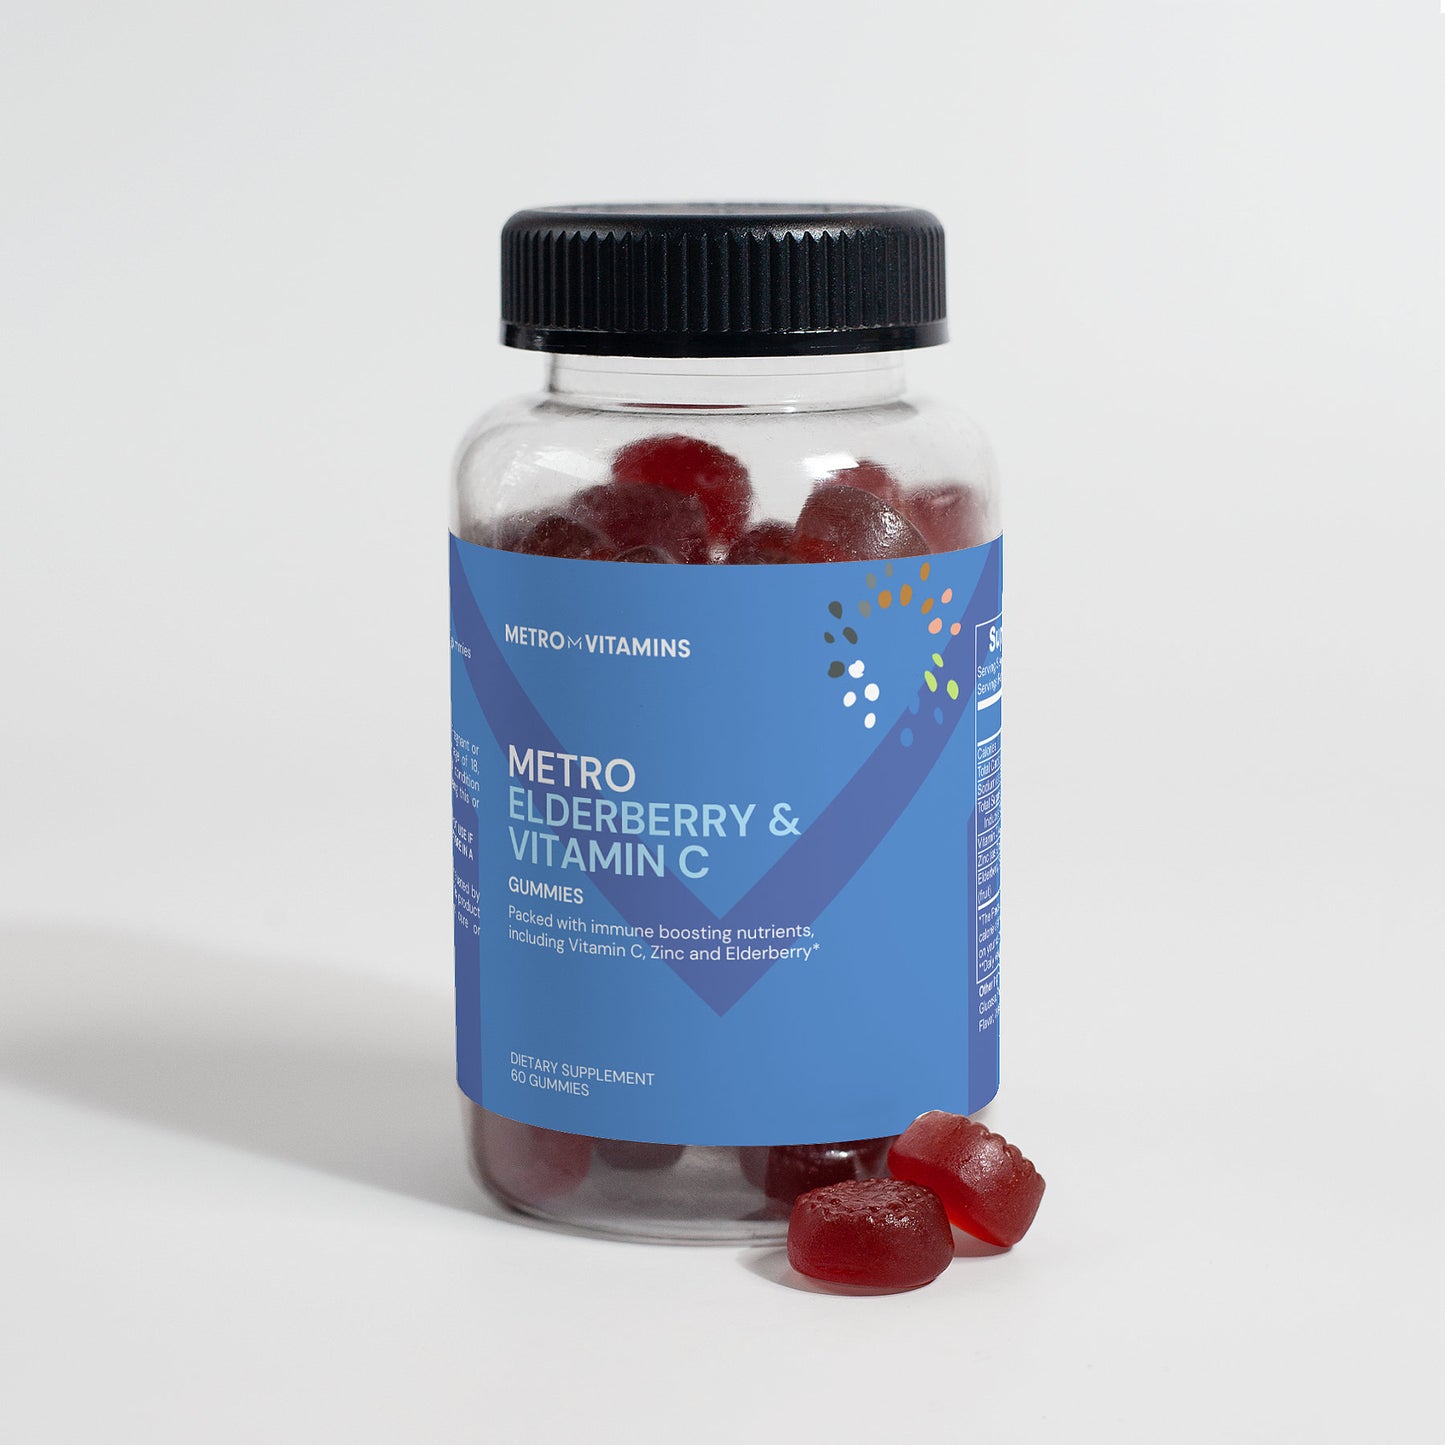 Elderberry & Vitamin C